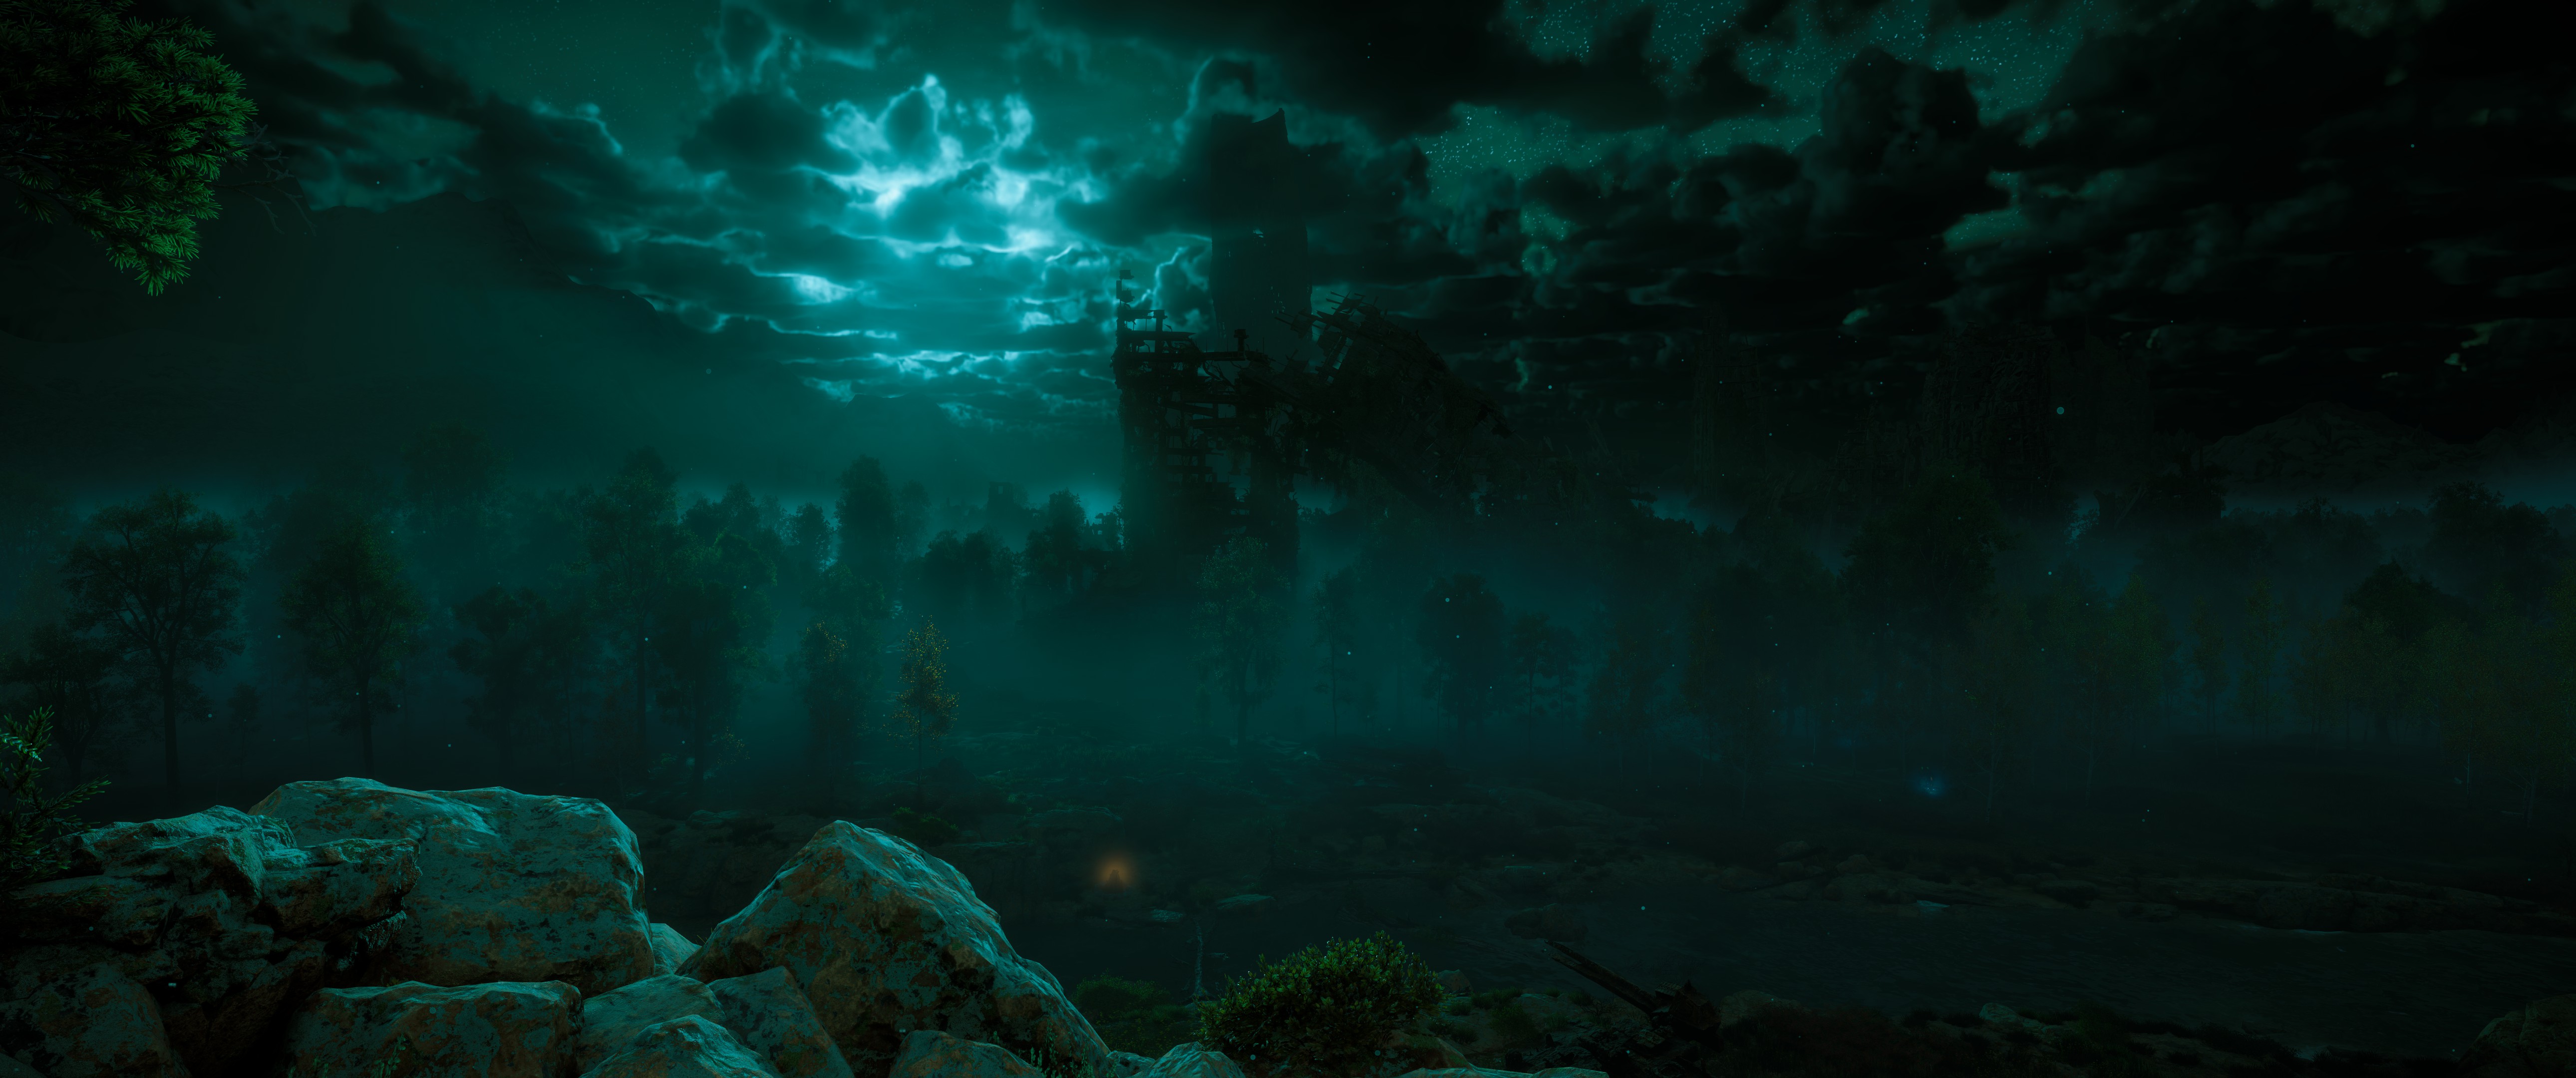 Horizon Zero Dawn Night Moonlight Mist Ruins Post Apocalypse Forest Video Games Digital Art Low Ligh 5160x2160